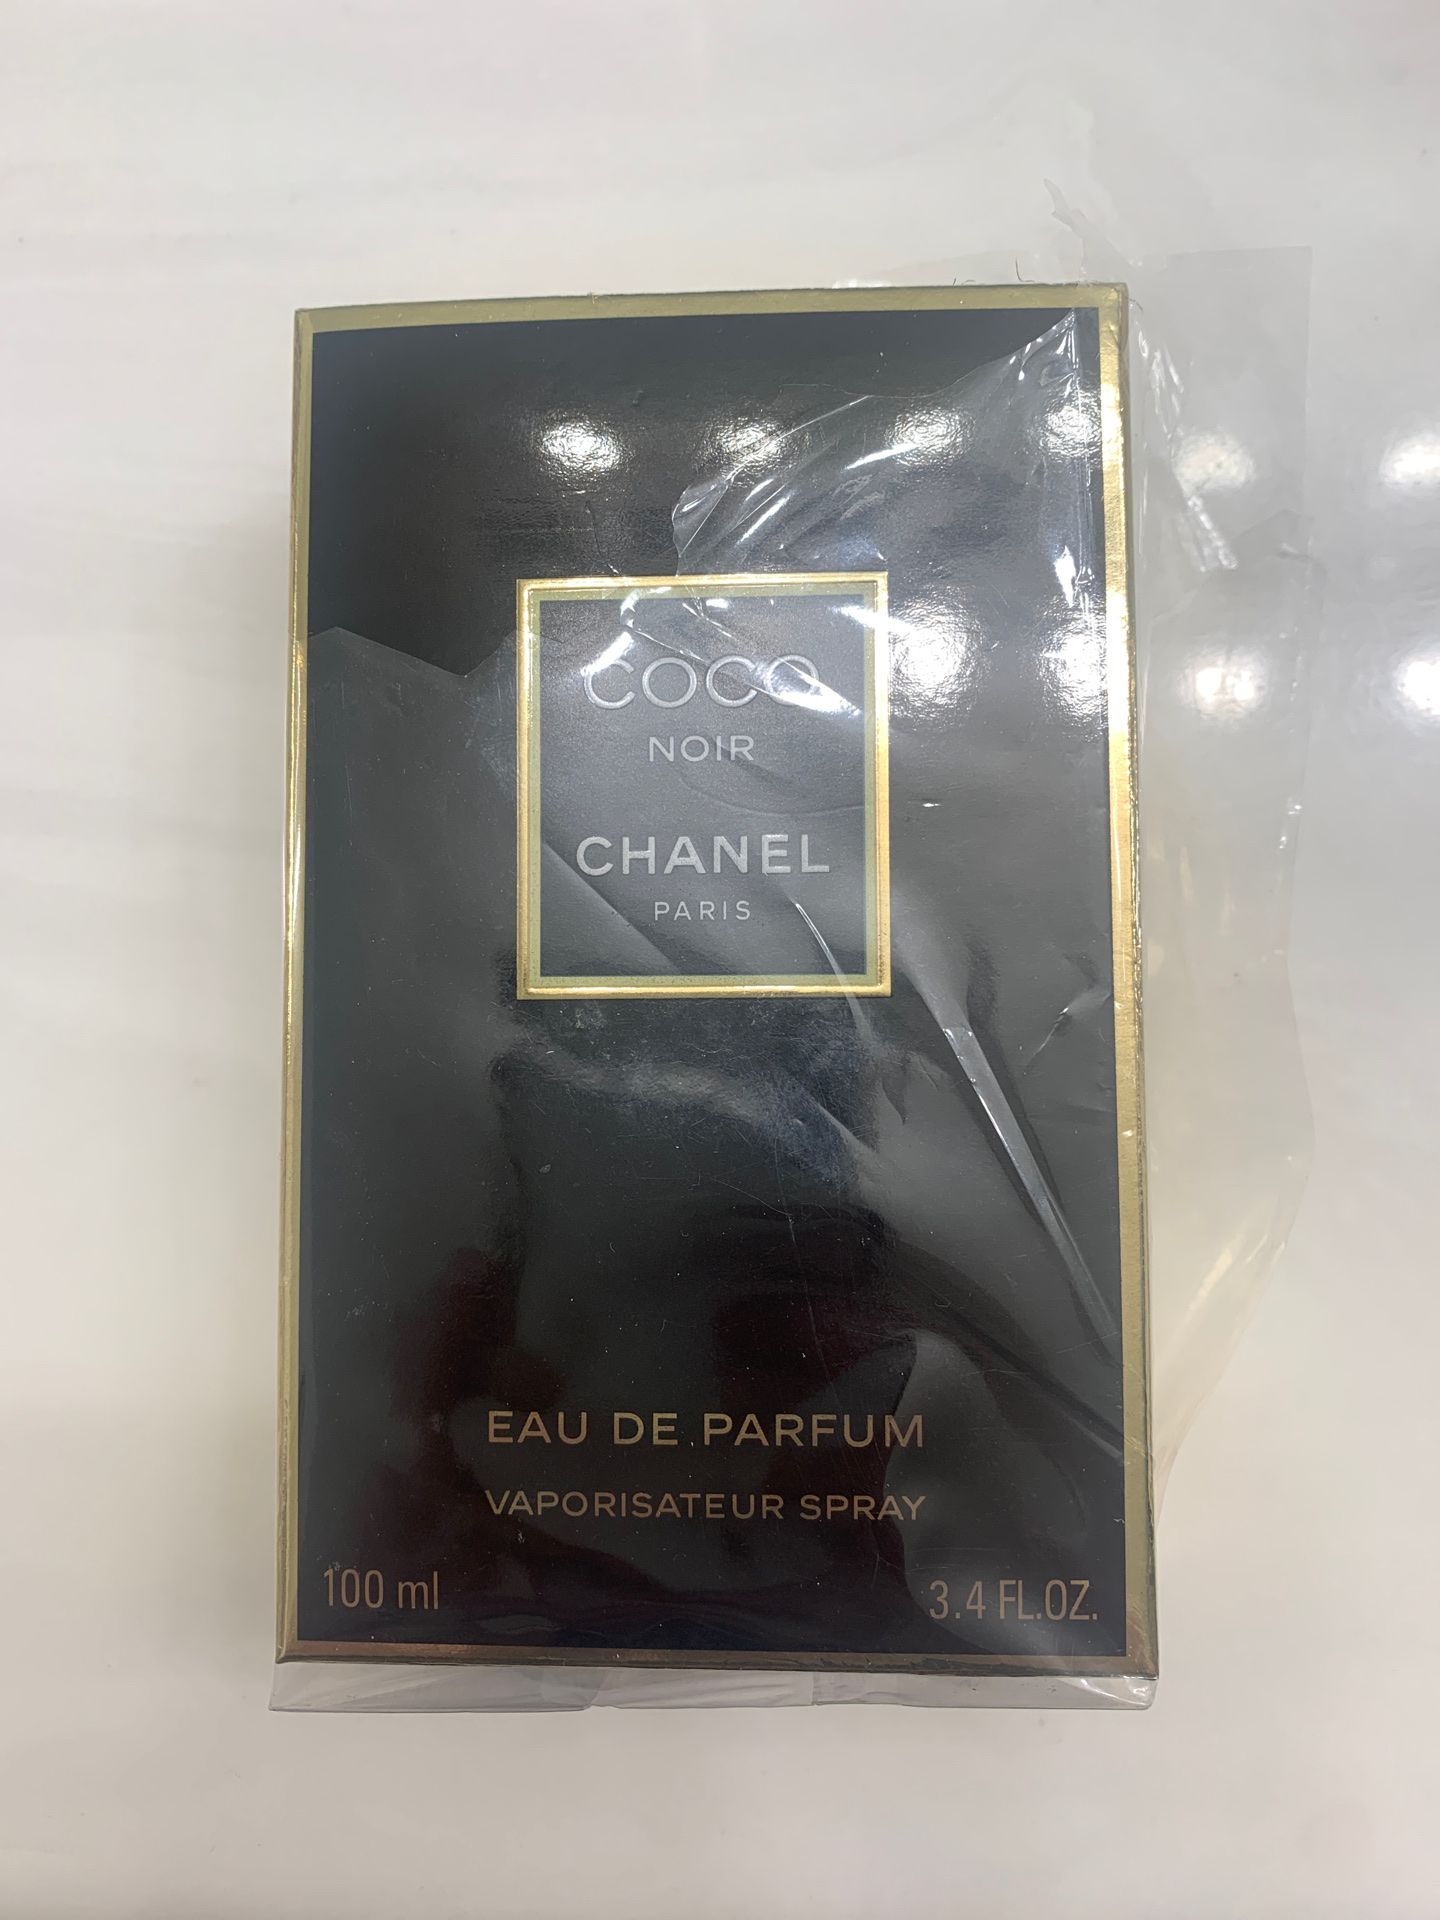 Chanel Coco Noir EDP perfume fragrance